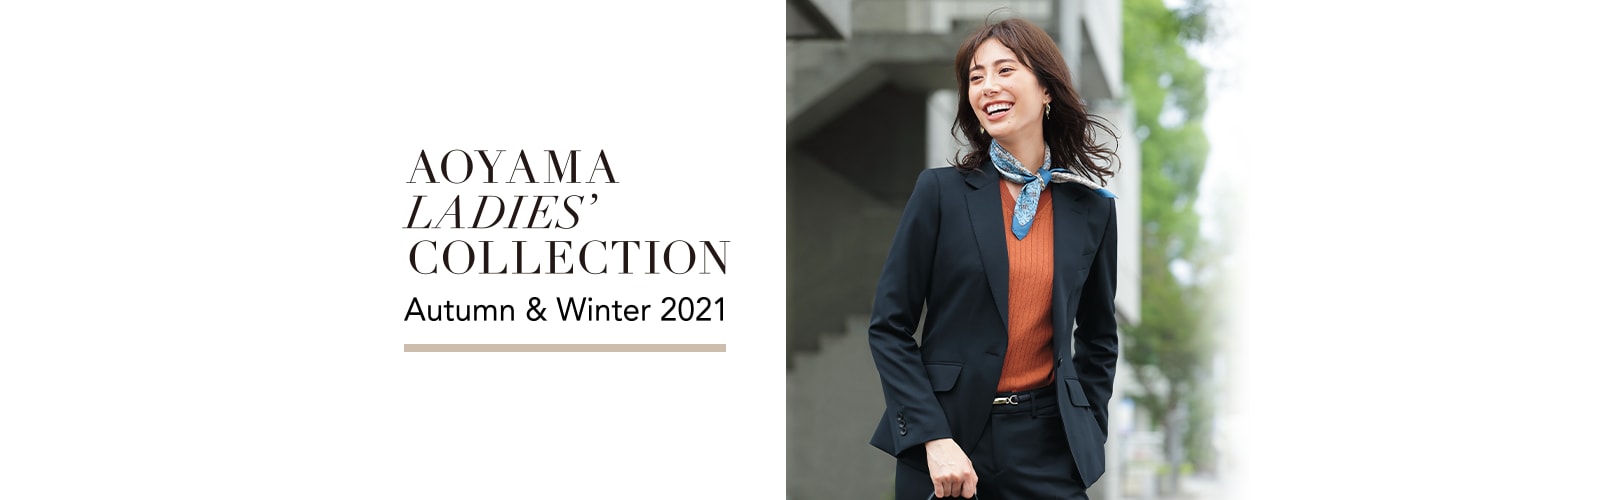 AOYAMA LADIES' COLLECTION Autumn & Winter 2021